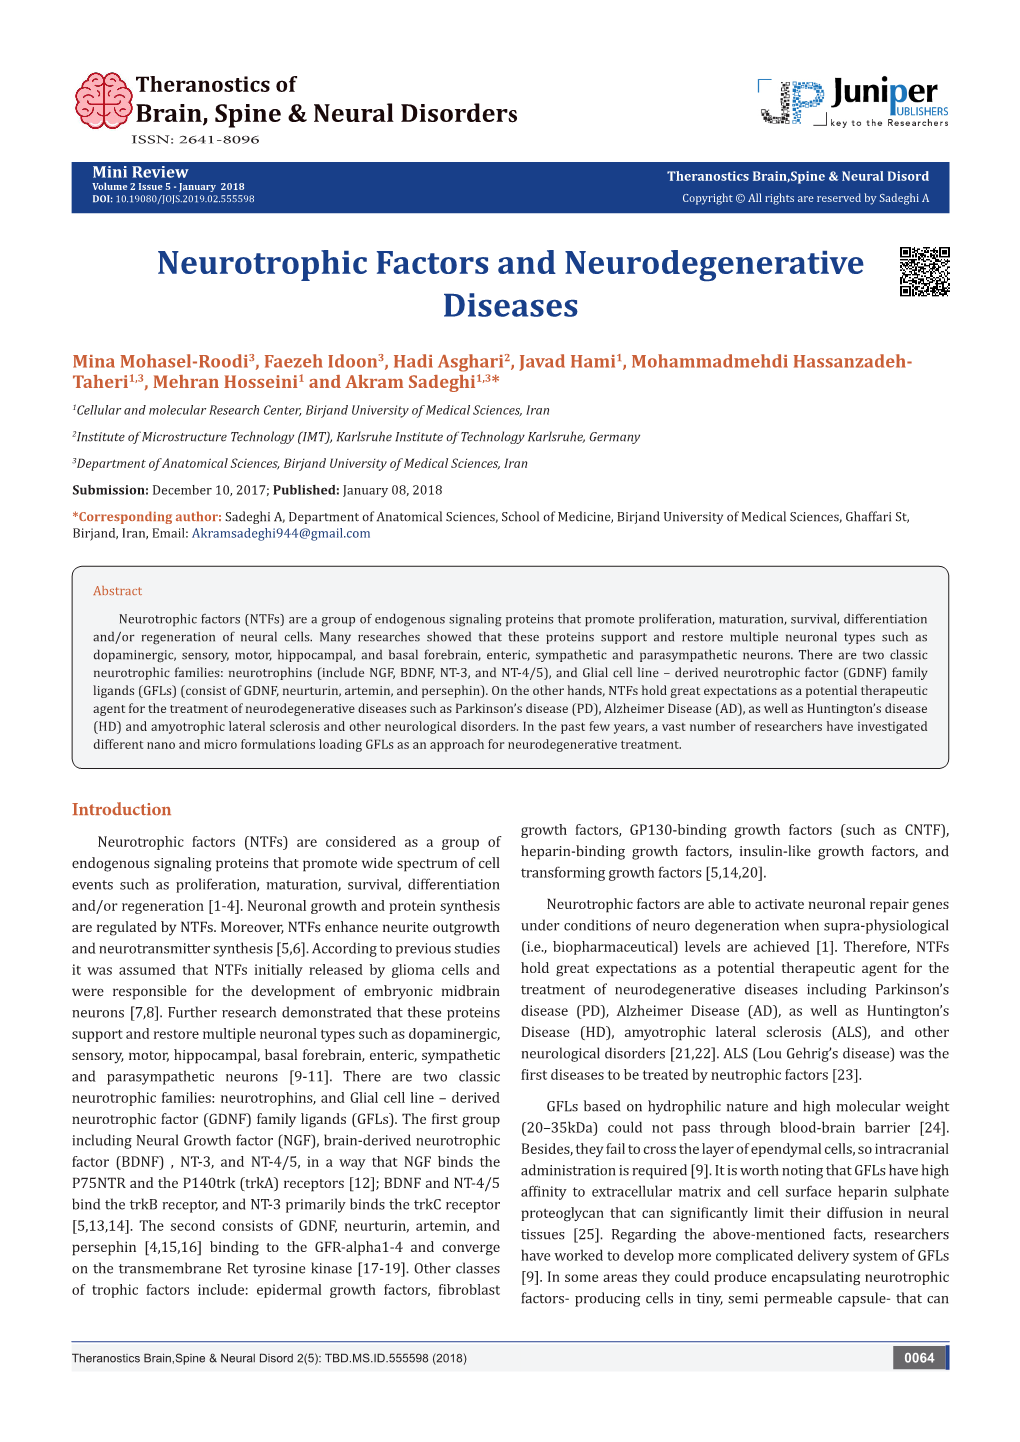 Neurotrophic Factors and Neurodegenerative Diseases